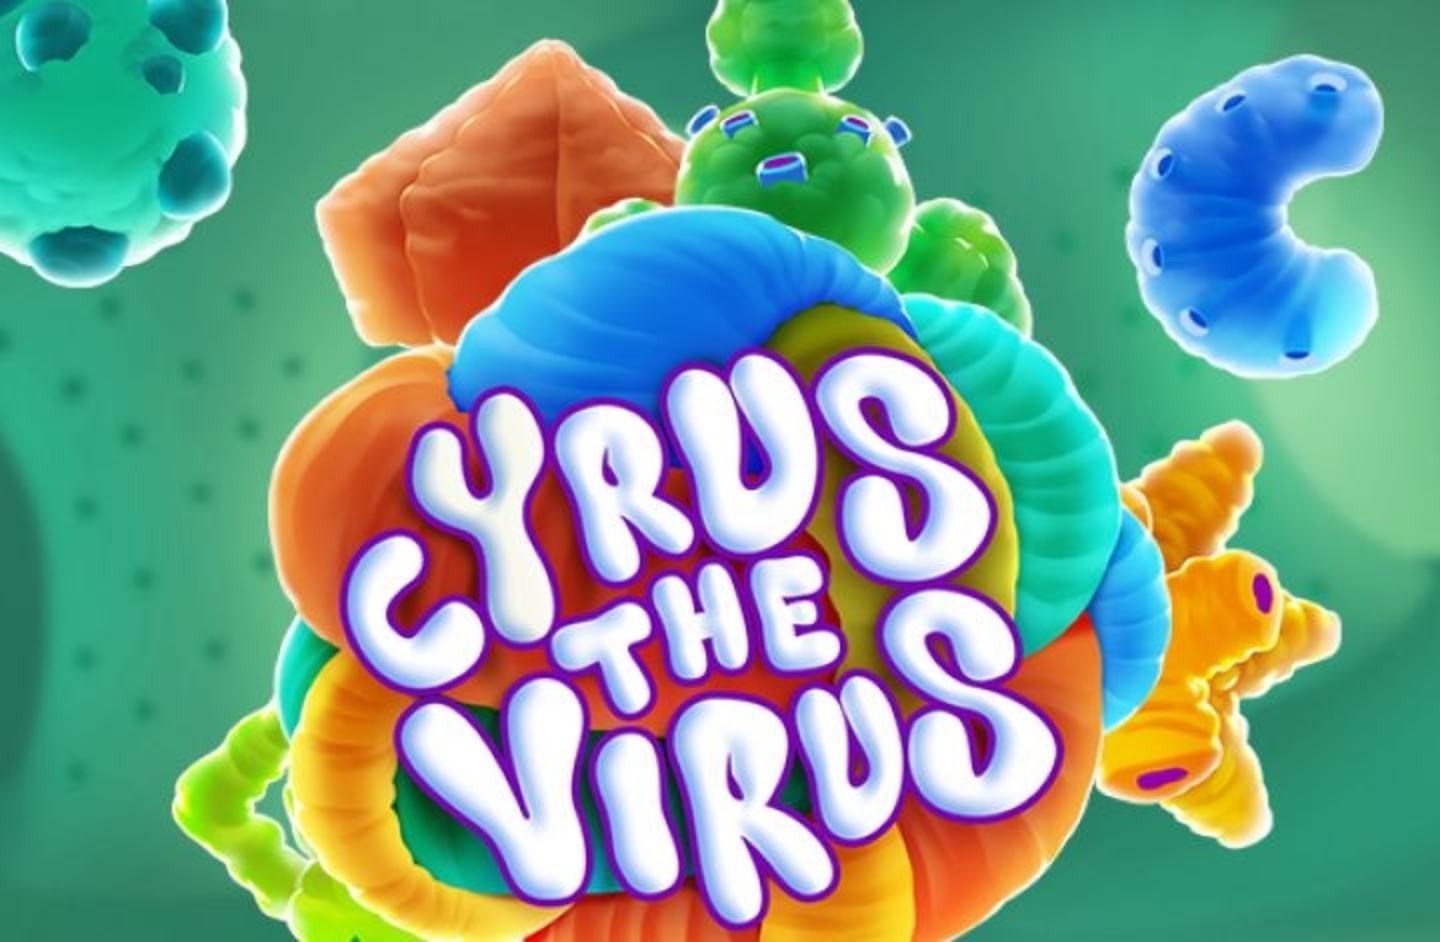 Cyrus the Virus demo